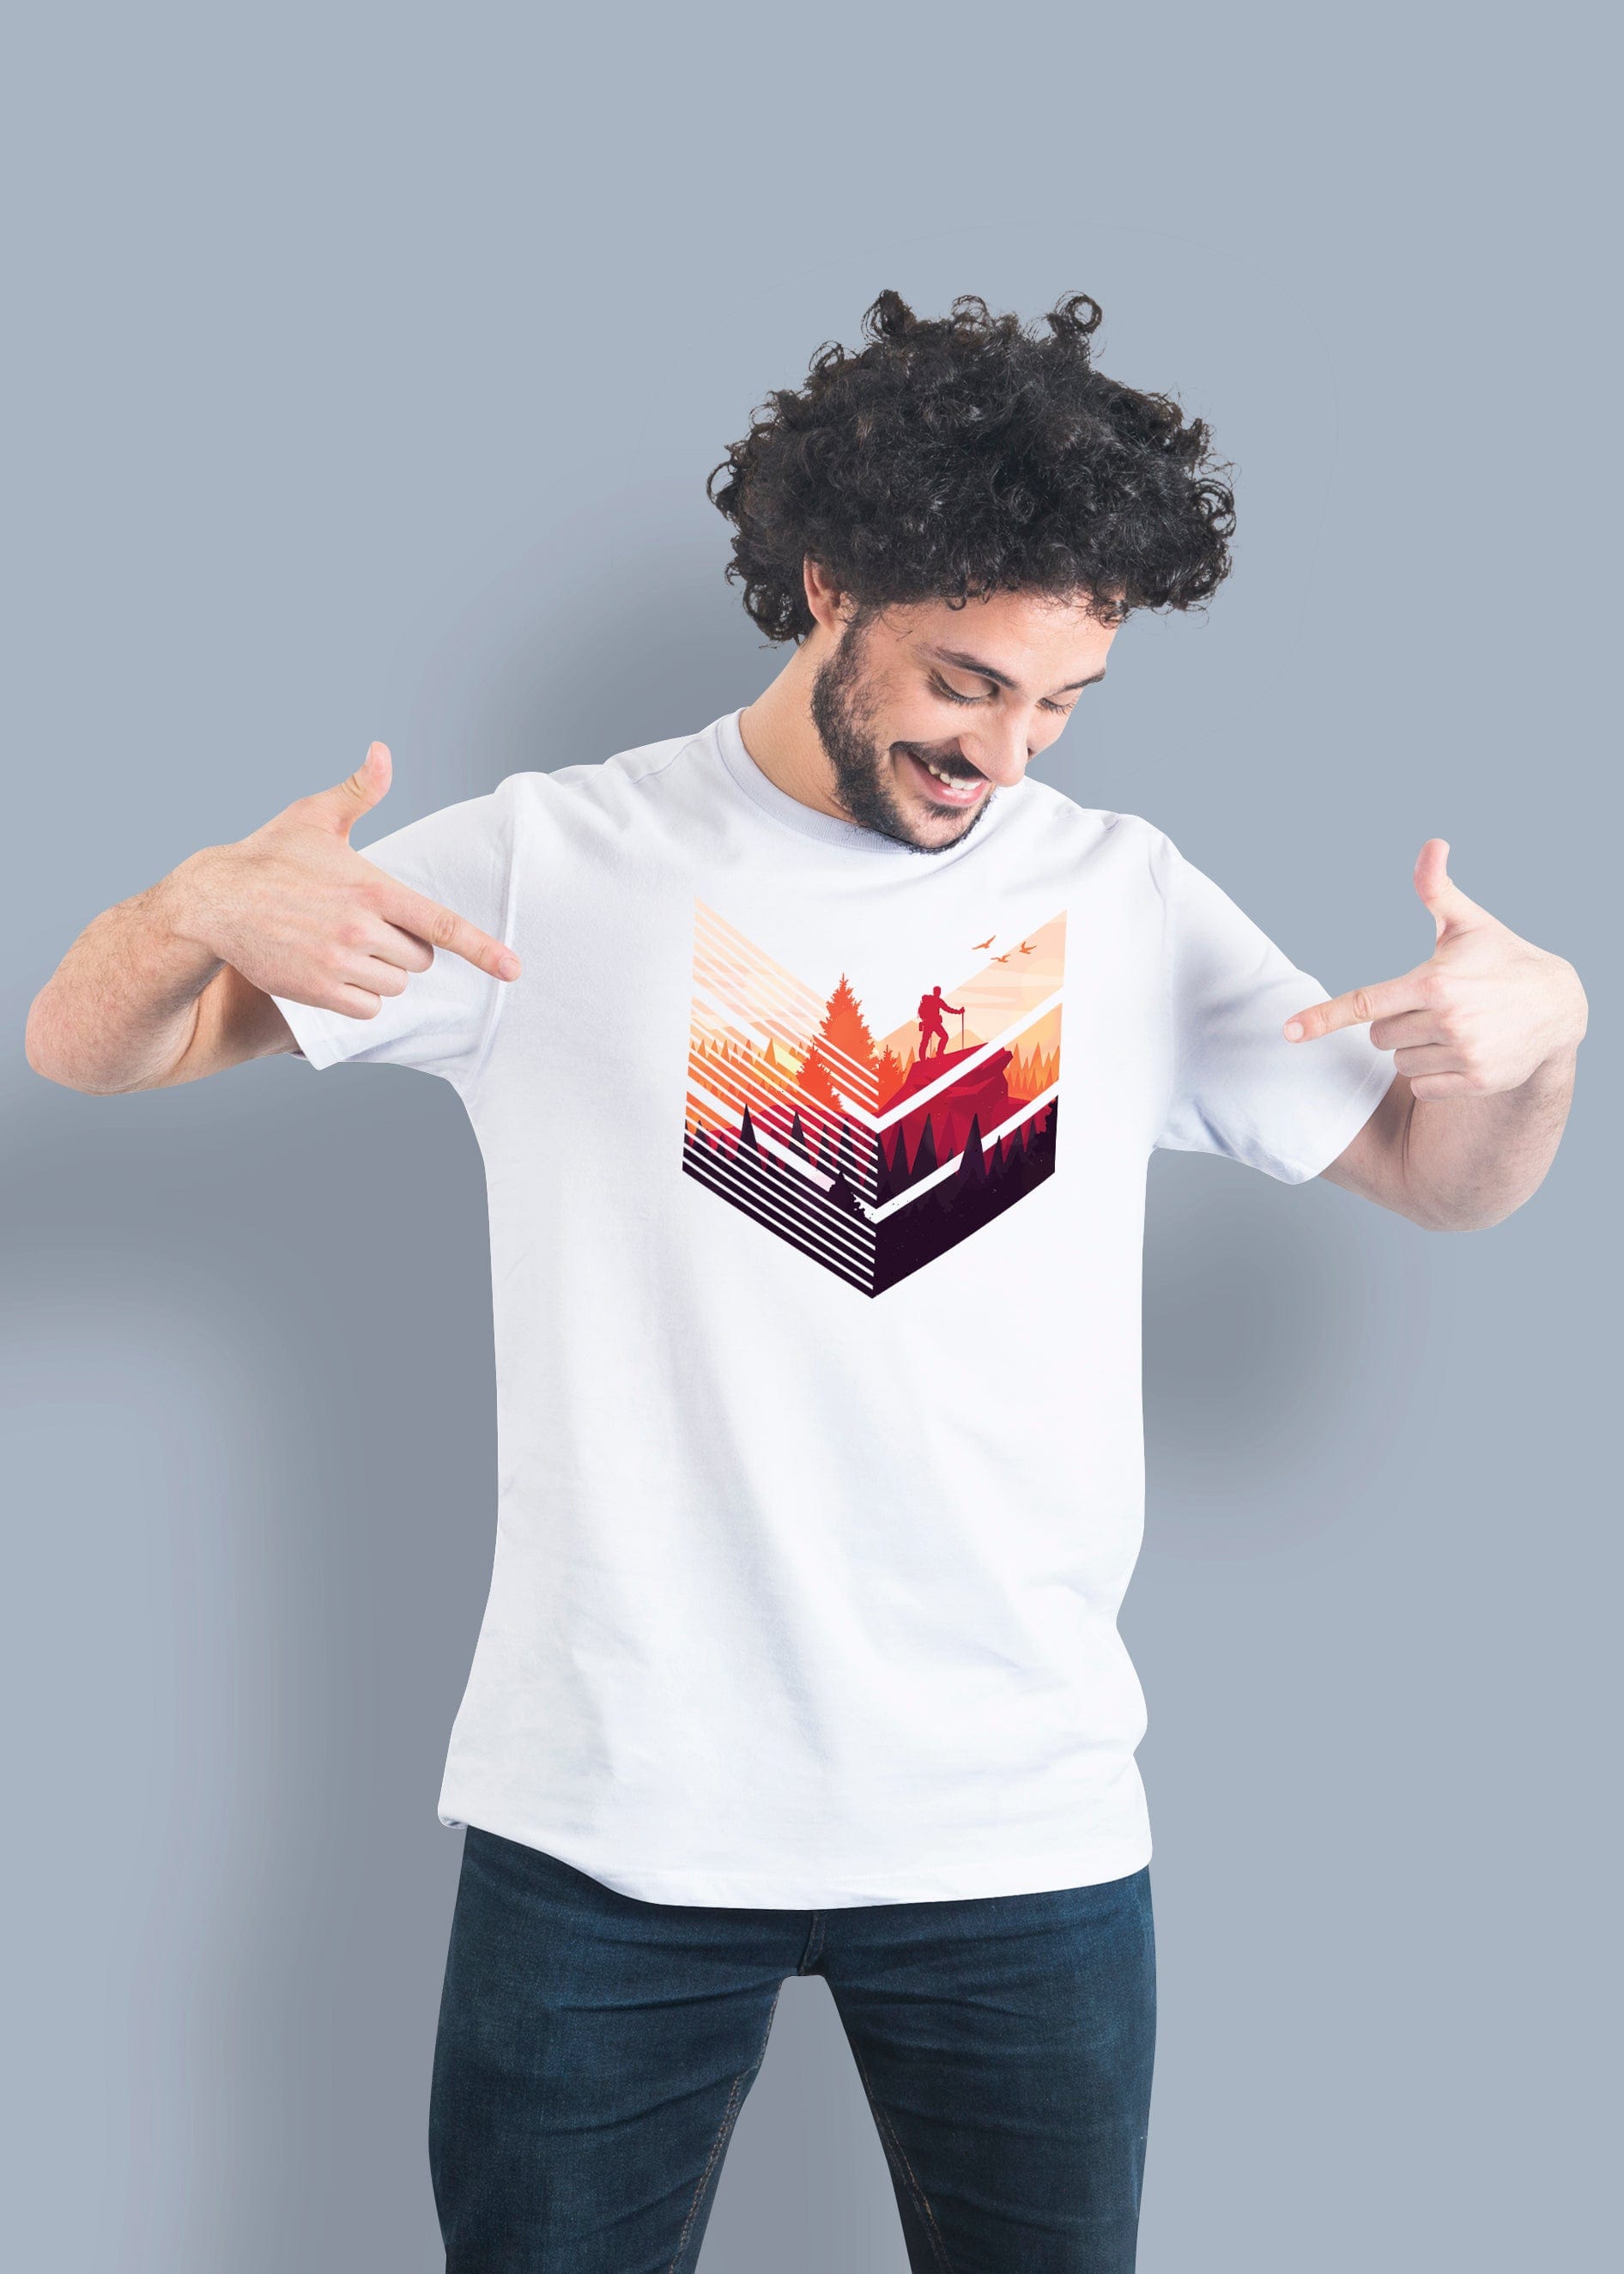 Arrow Forest Printed Half Sleeve Premium Cotton T-shirt For Men